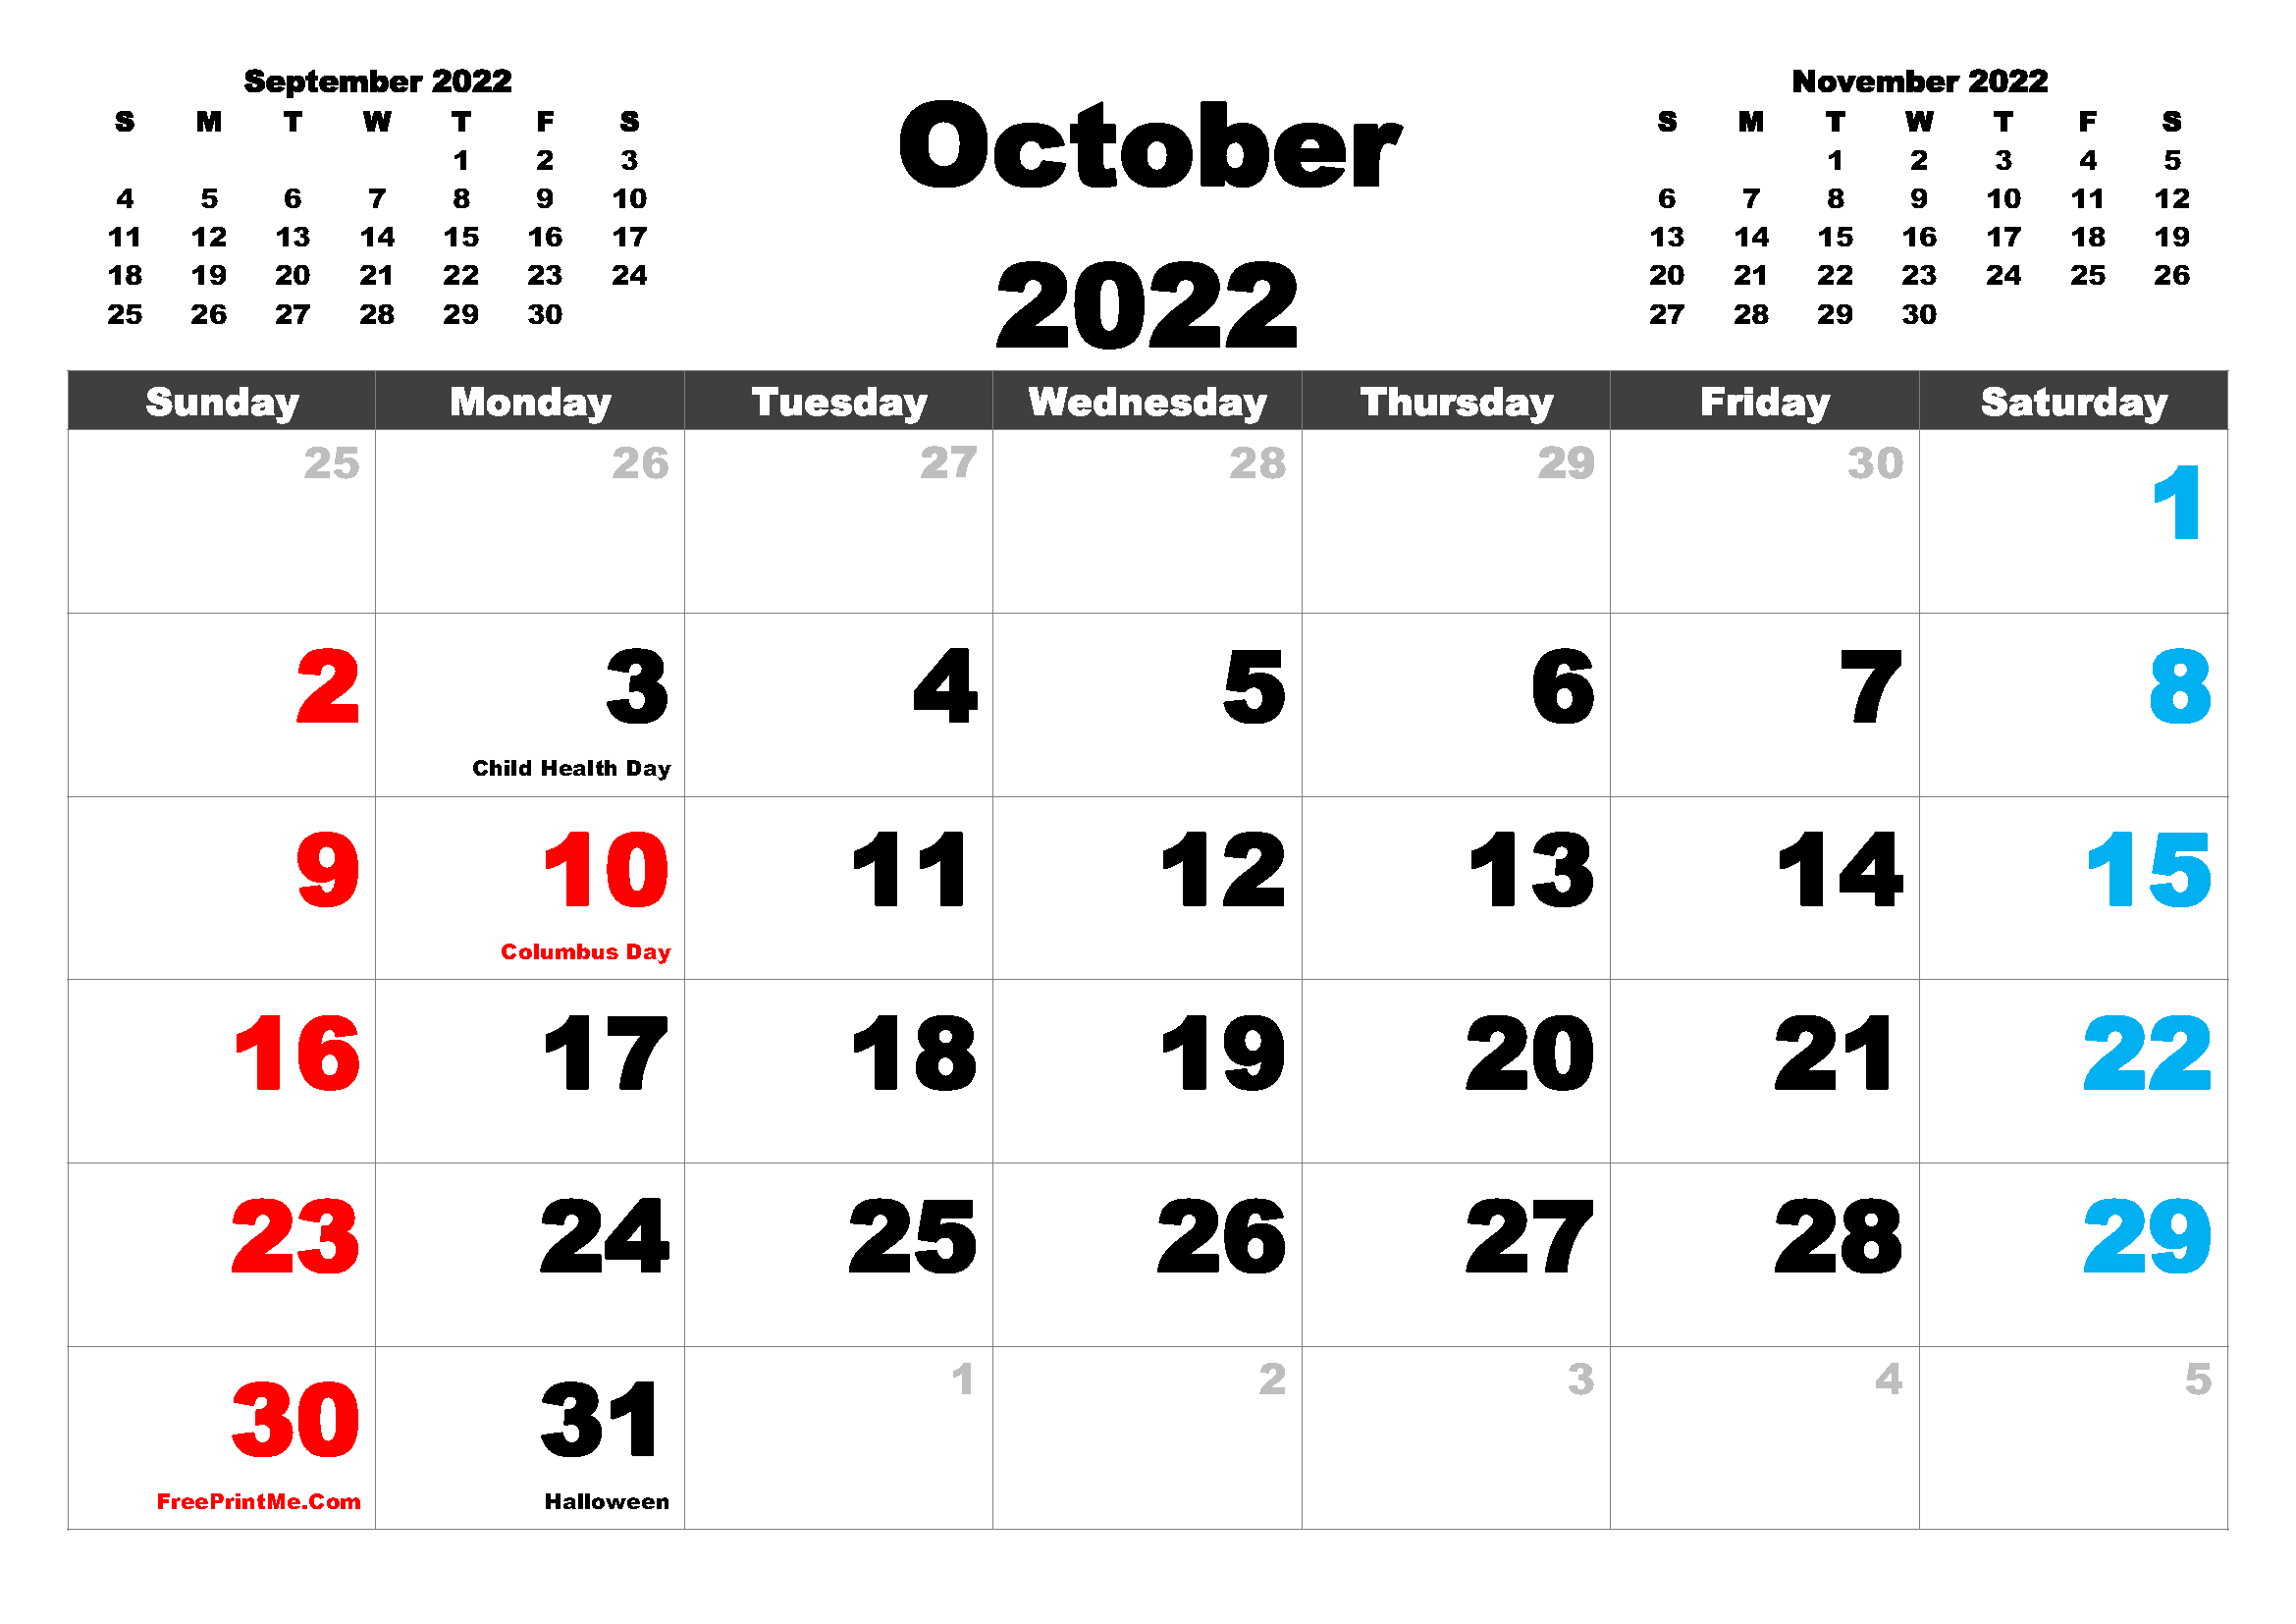 Free Printable October 2022 Calendar Free Printable October 2022 Calendar Pdf, Png Image